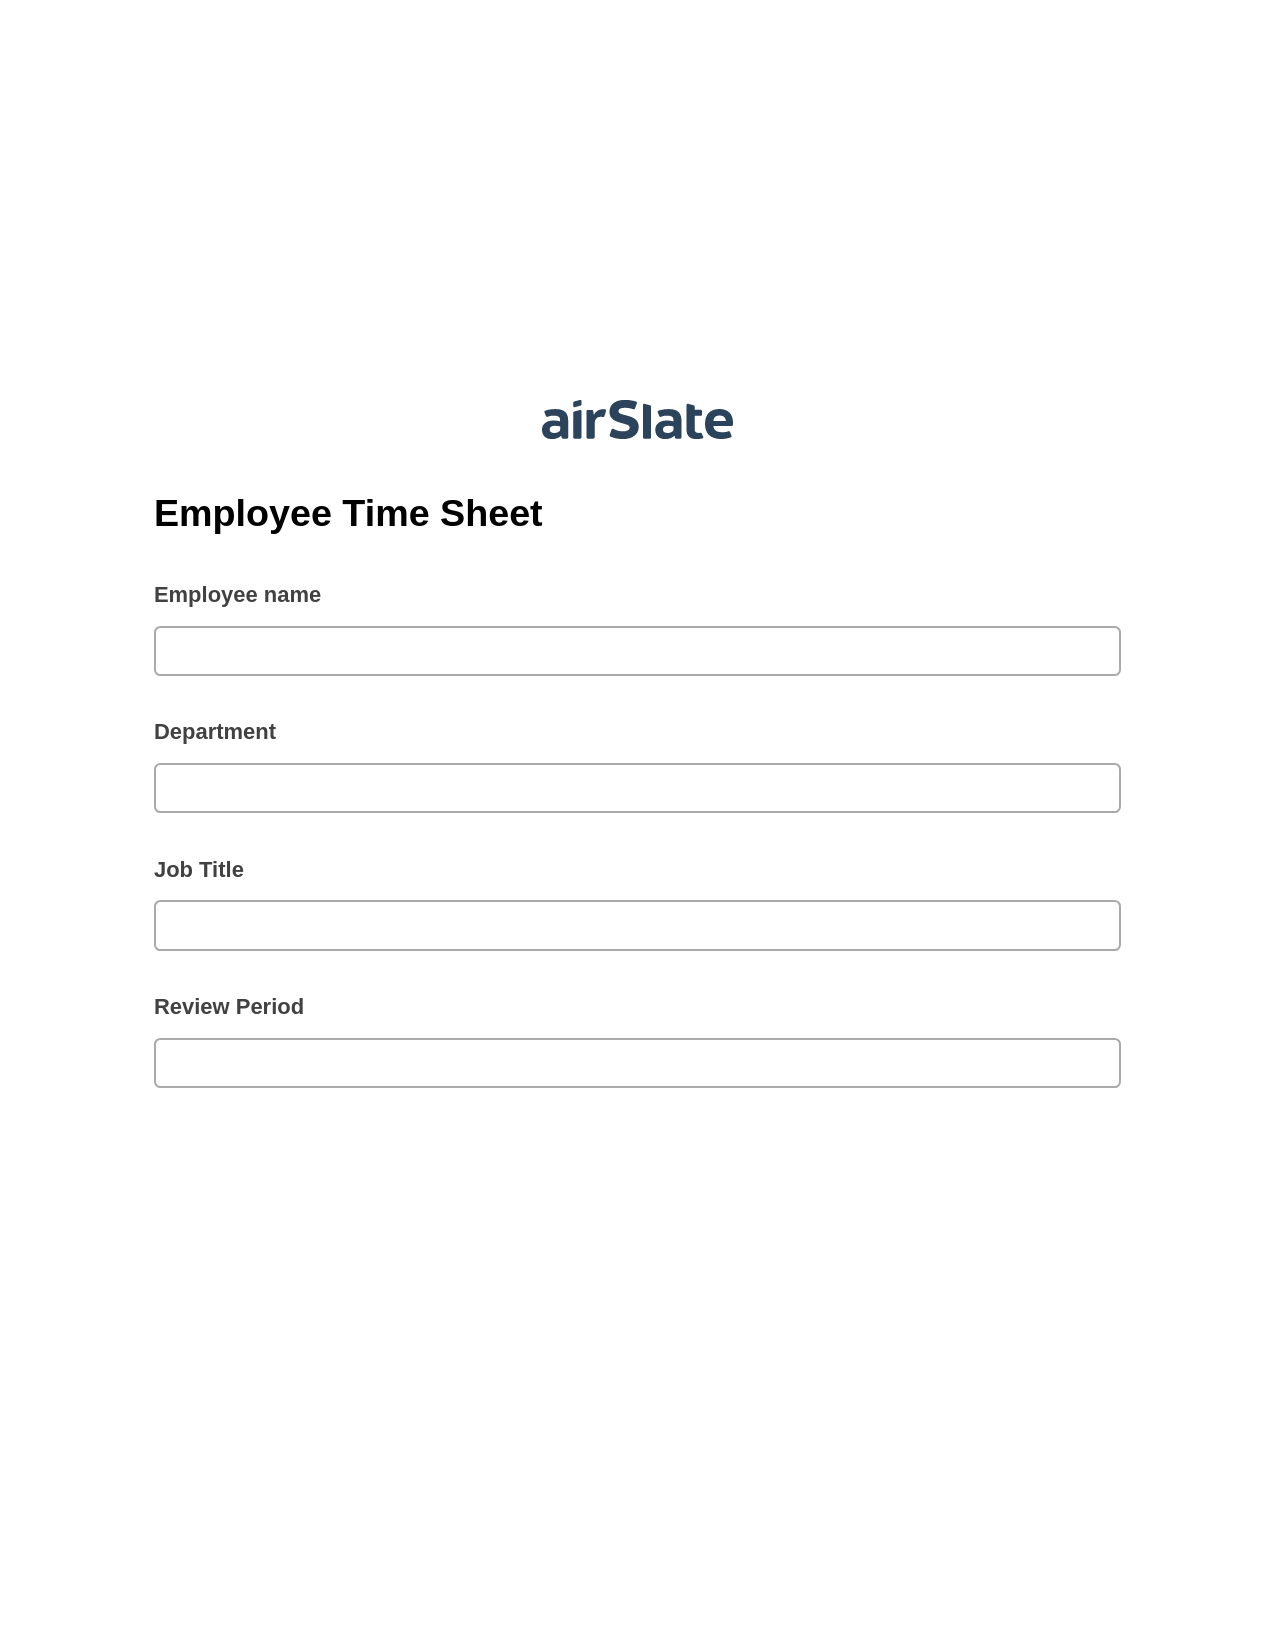 Multirole Employee Time Sheet Pre-fill from Google Sheets Bot, Create Salesforce Records Bot, Slack Notification Postfinish Bot